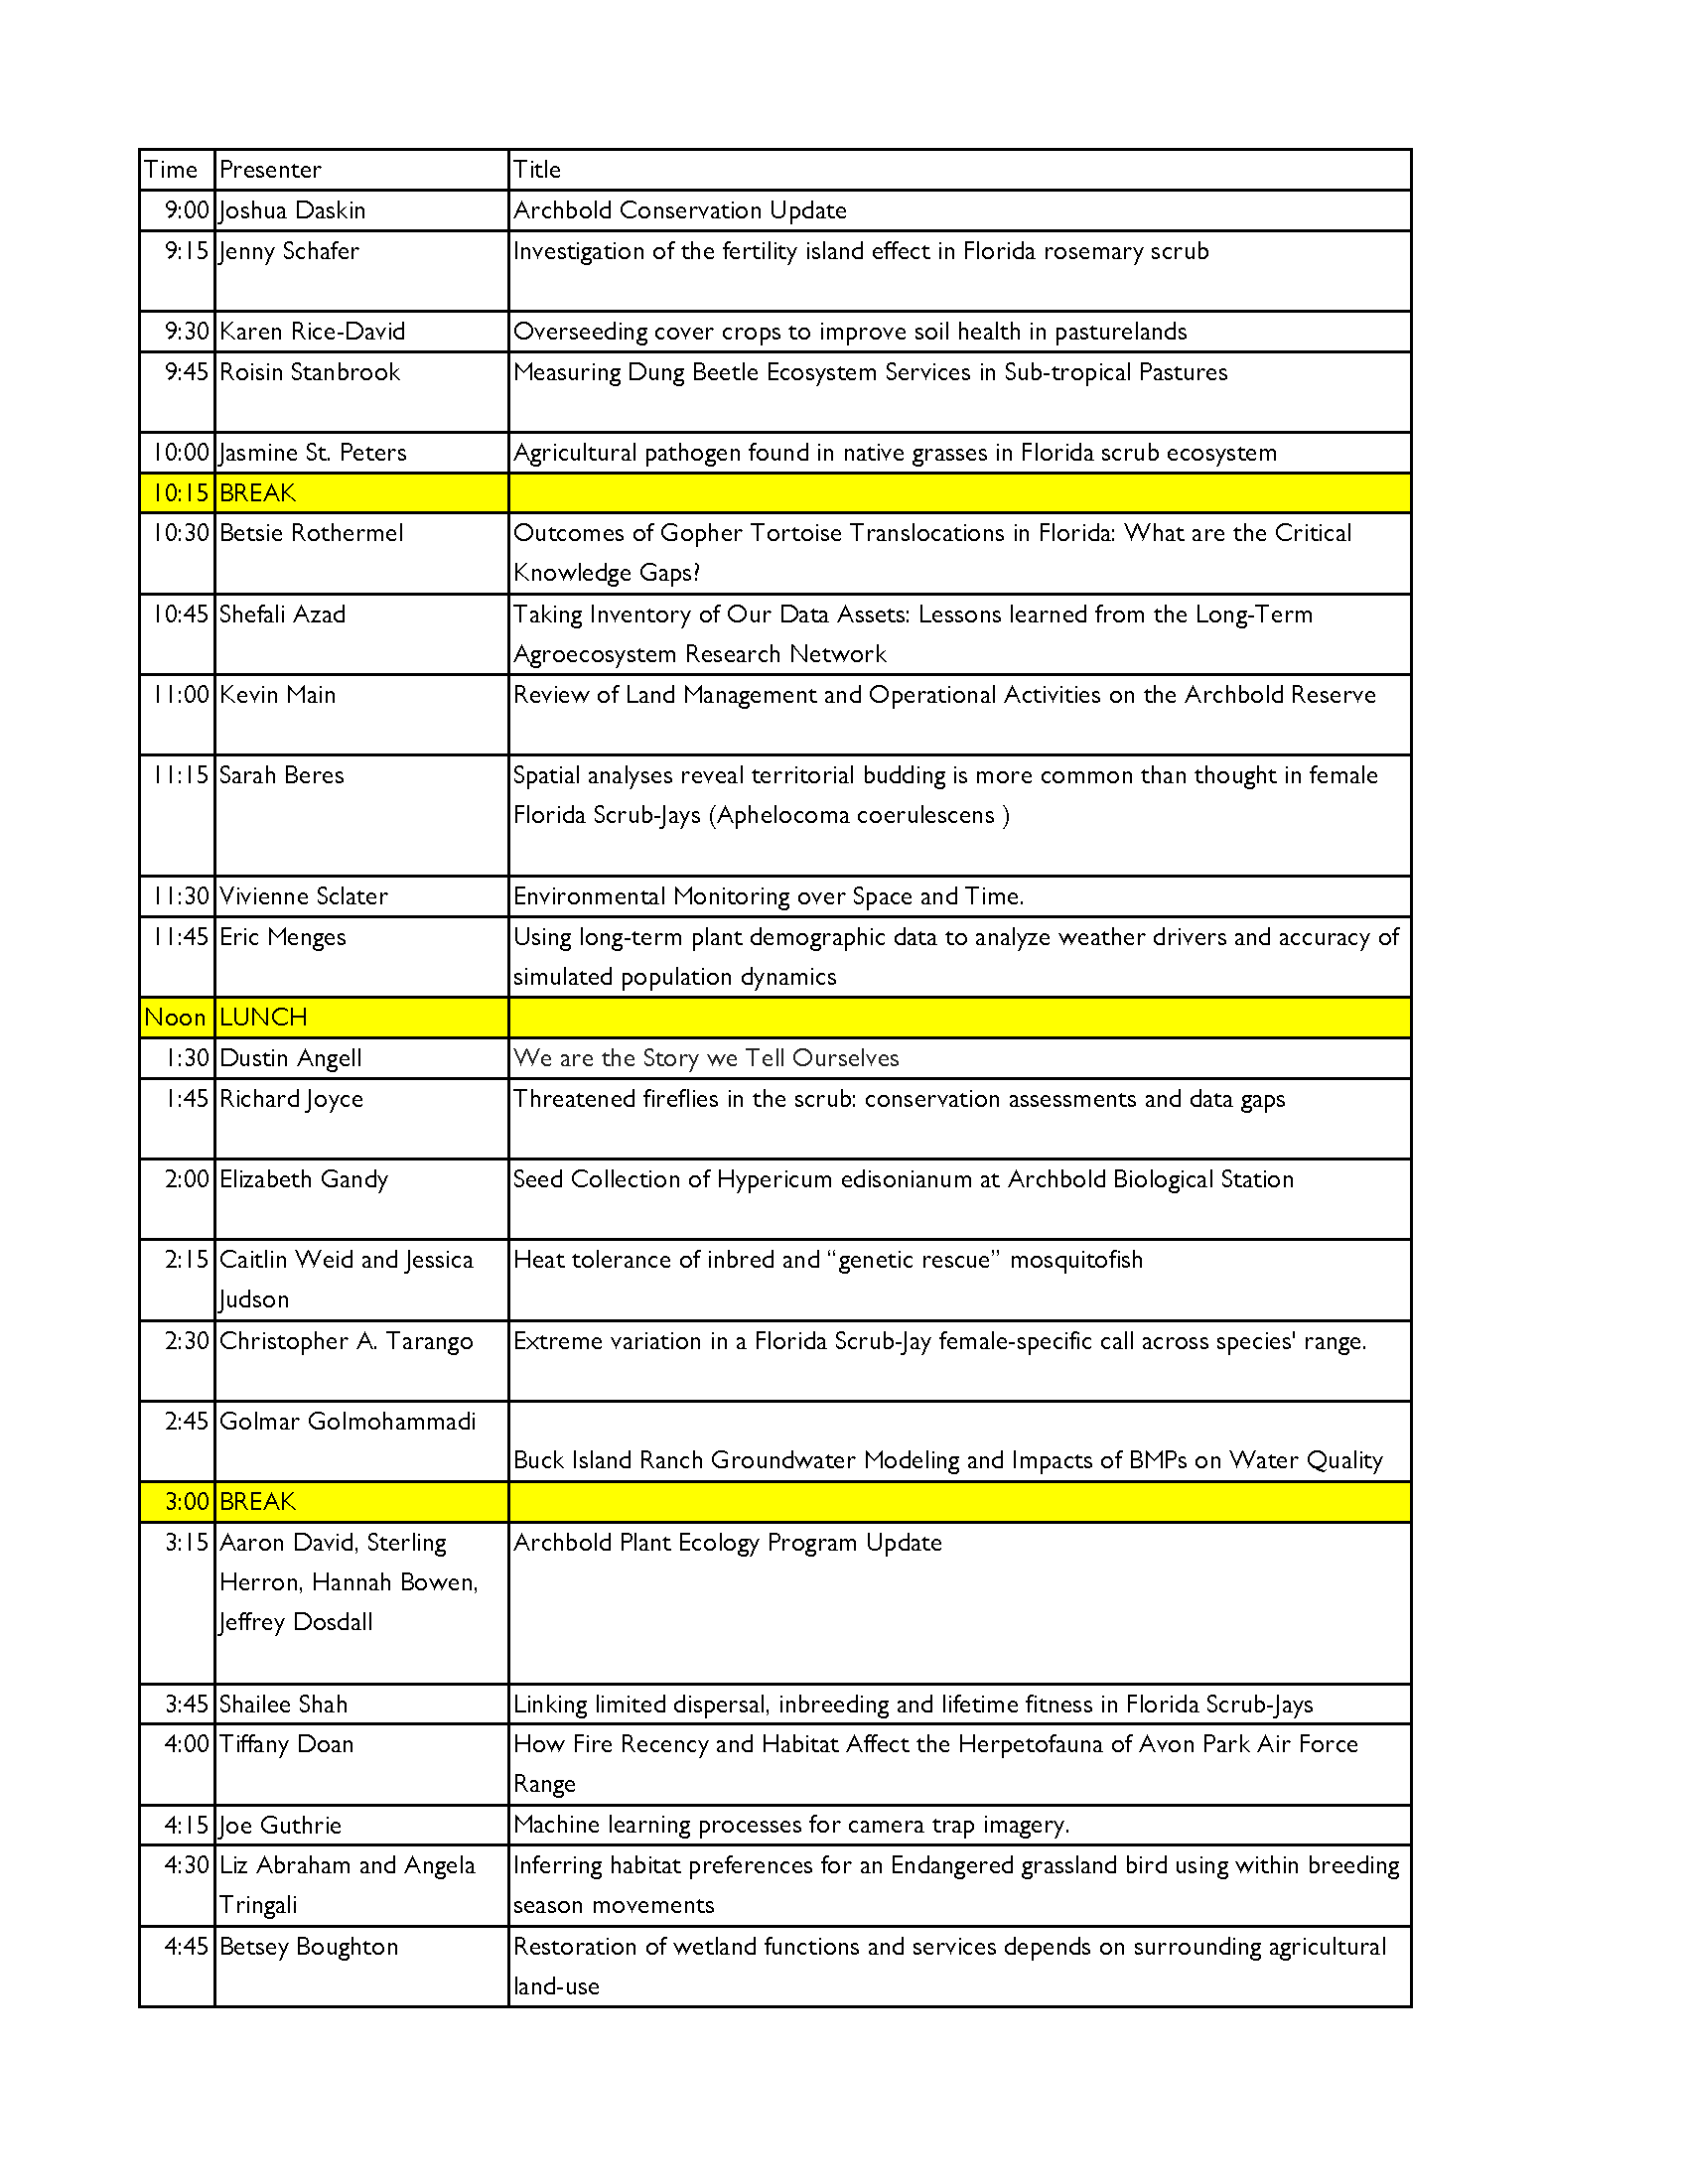 8th Annual Archbold Research Symposium Schedule